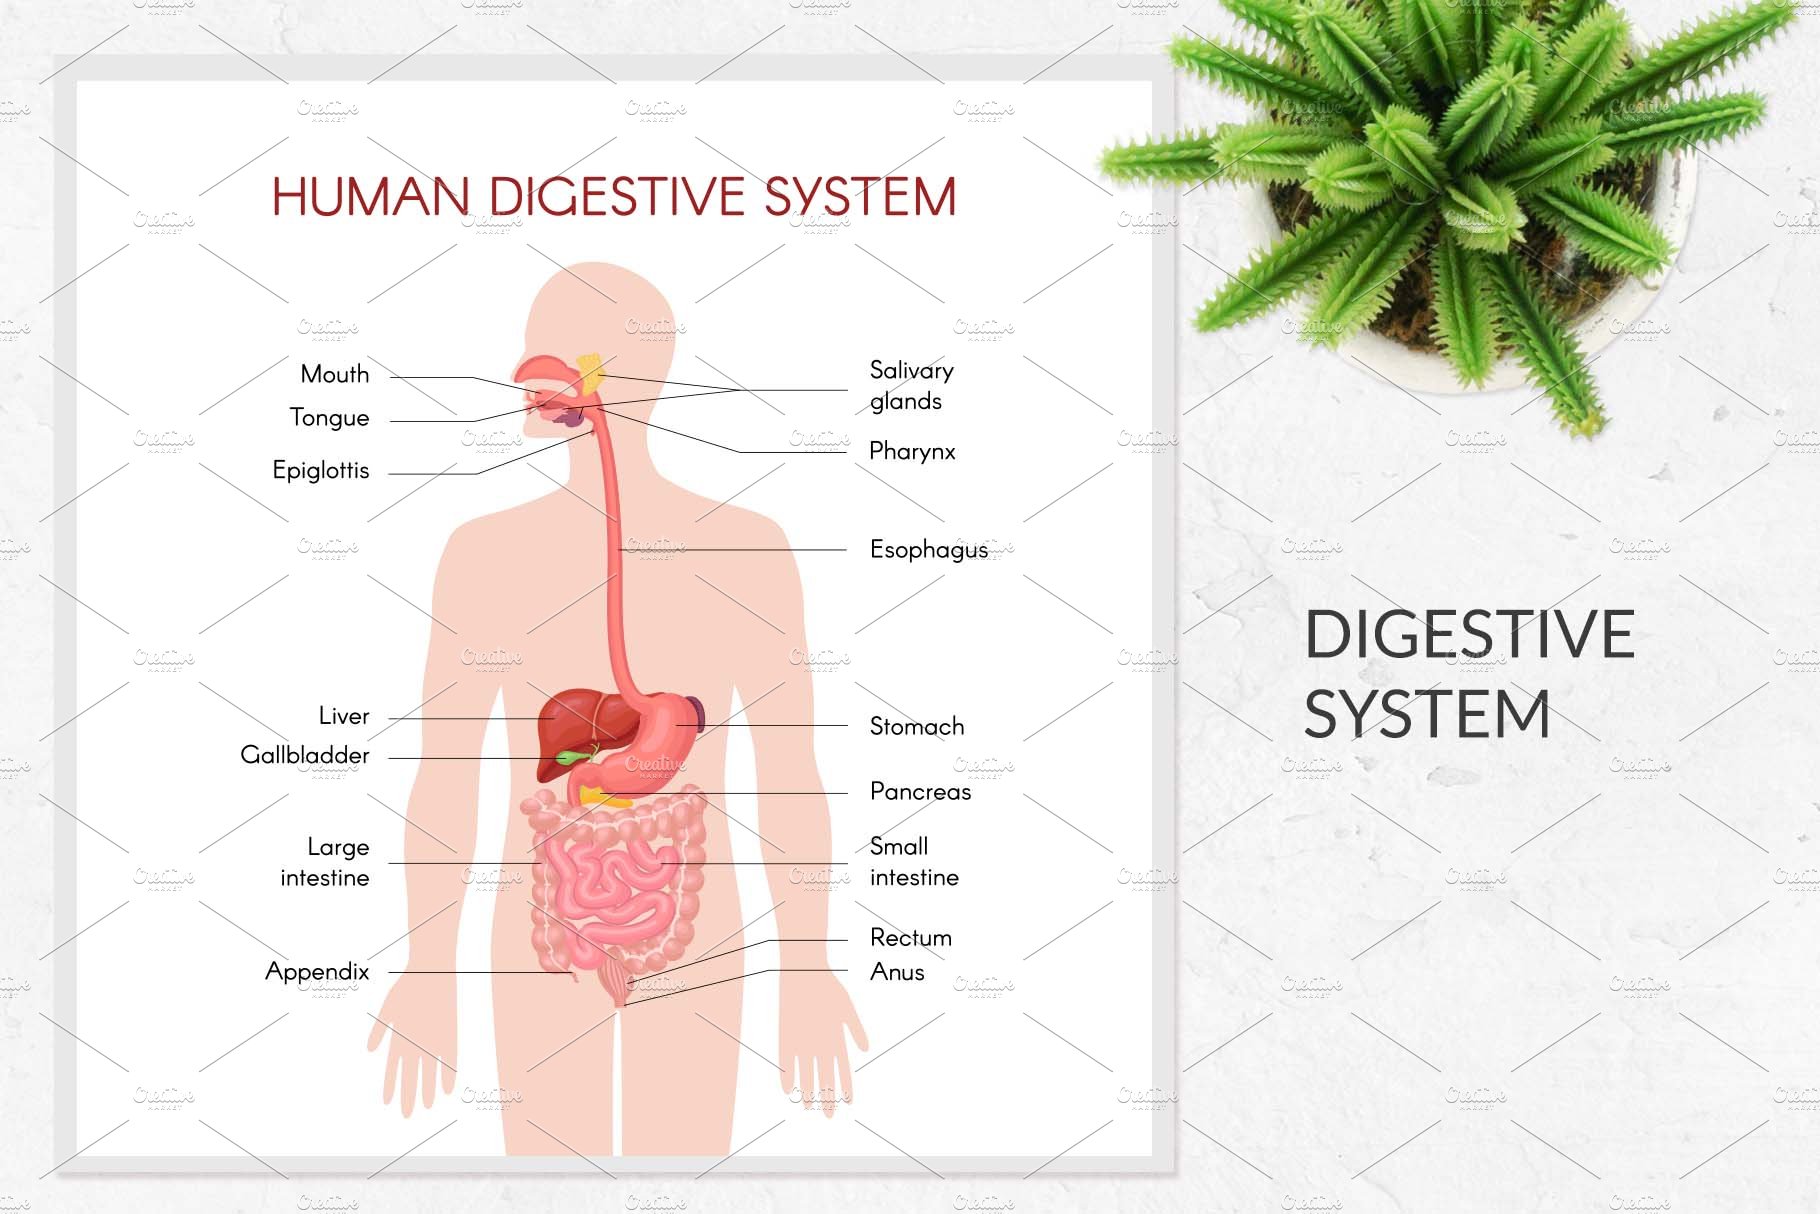 3 digestive system 527